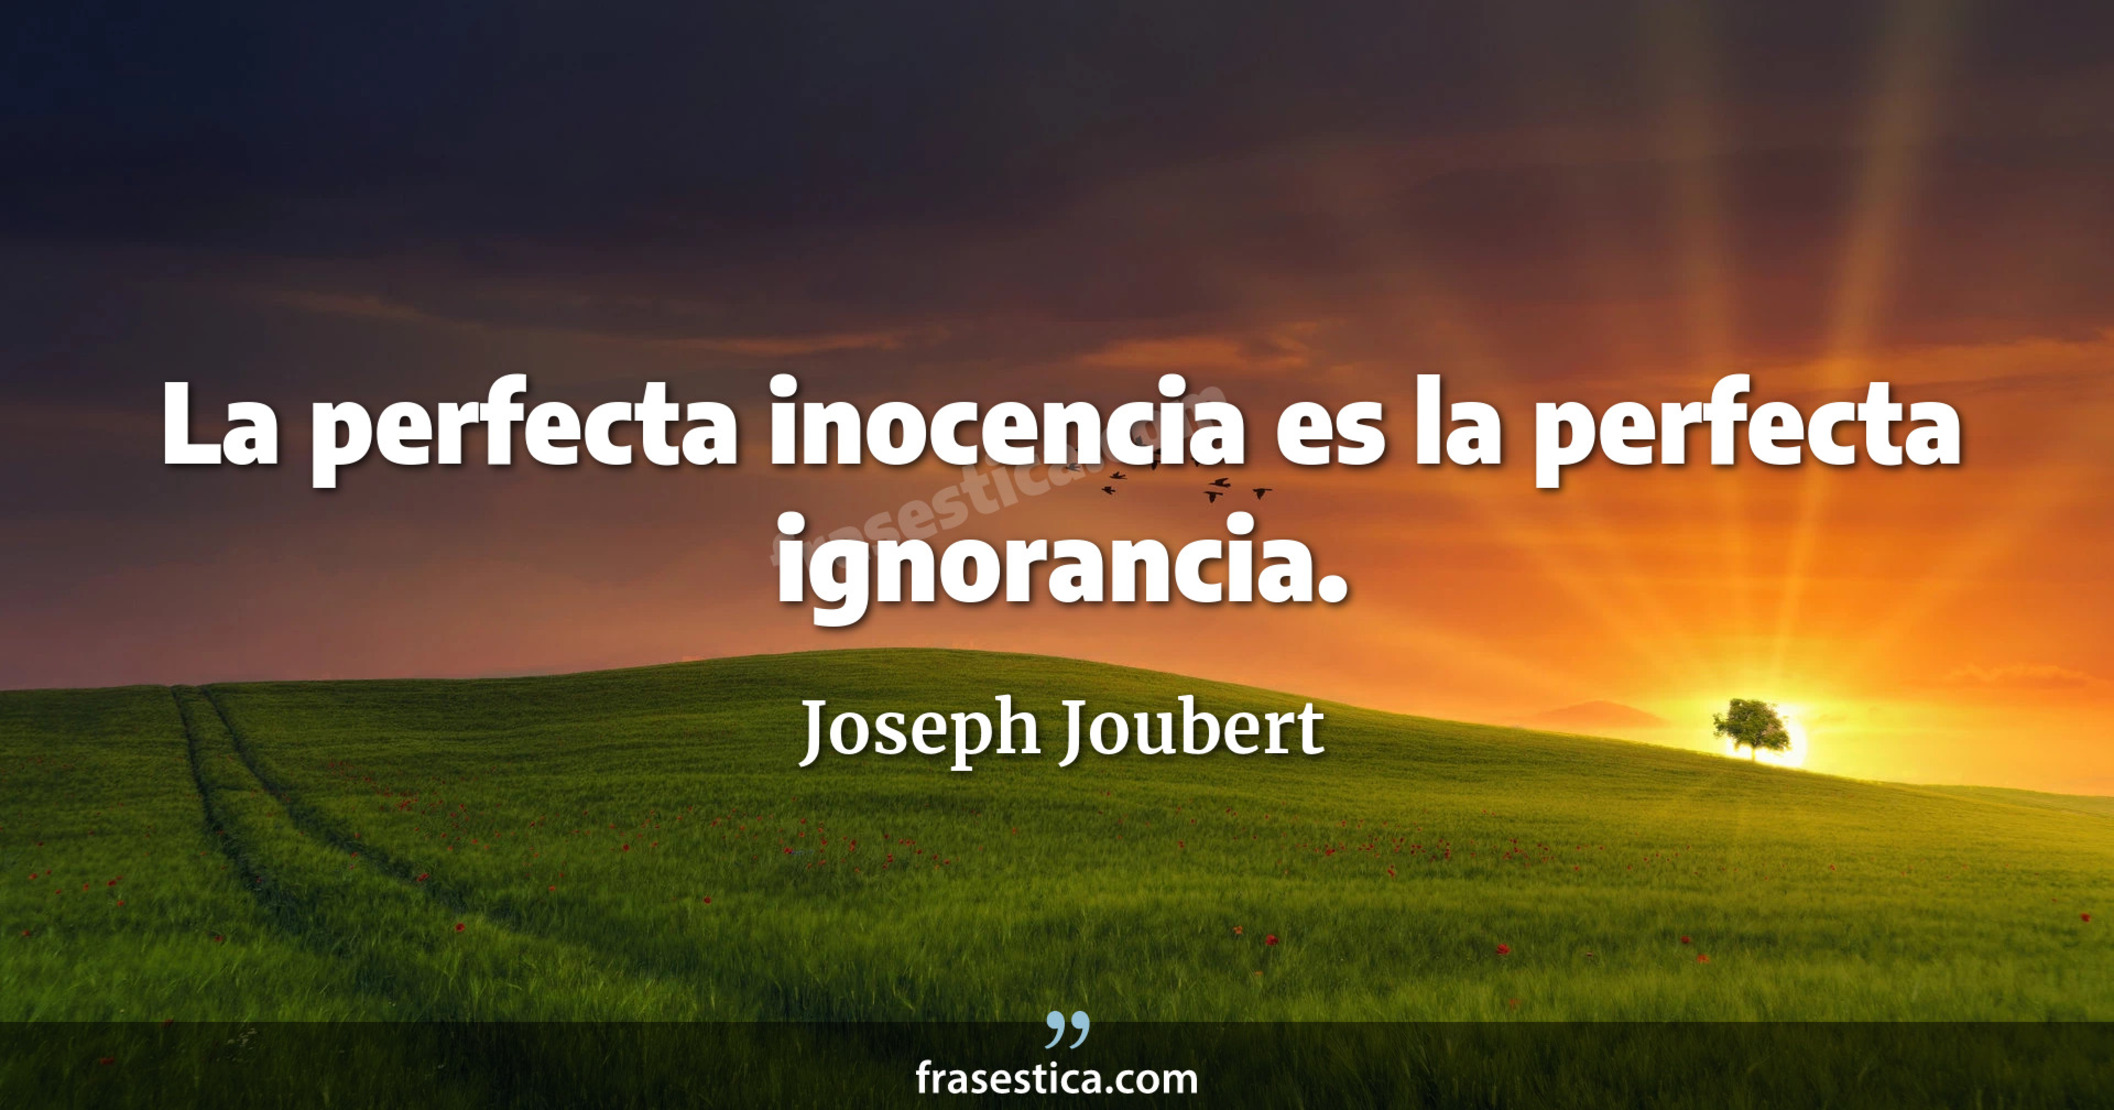 La perfecta inocencia es la perfecta ignorancia. - Joseph Joubert